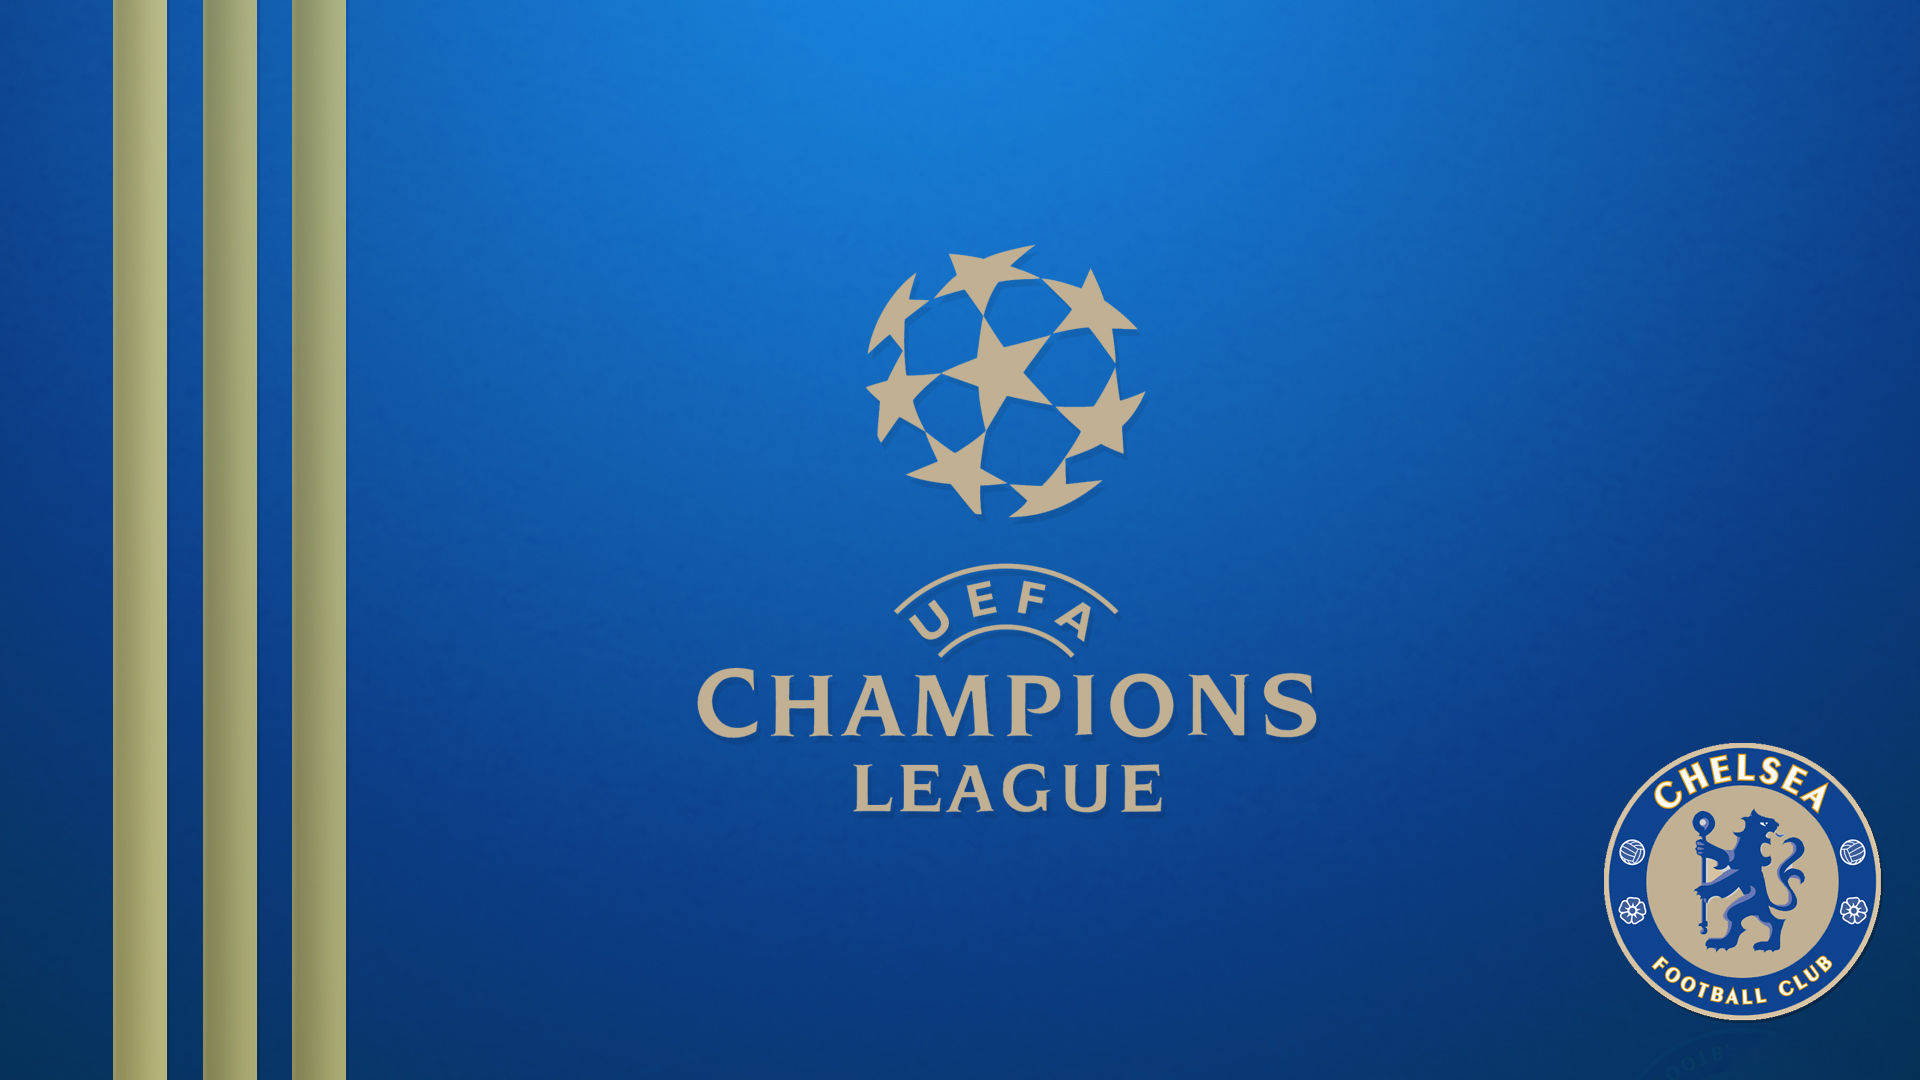 UEFA Champions League X Chelsea Football Club Wallpaper